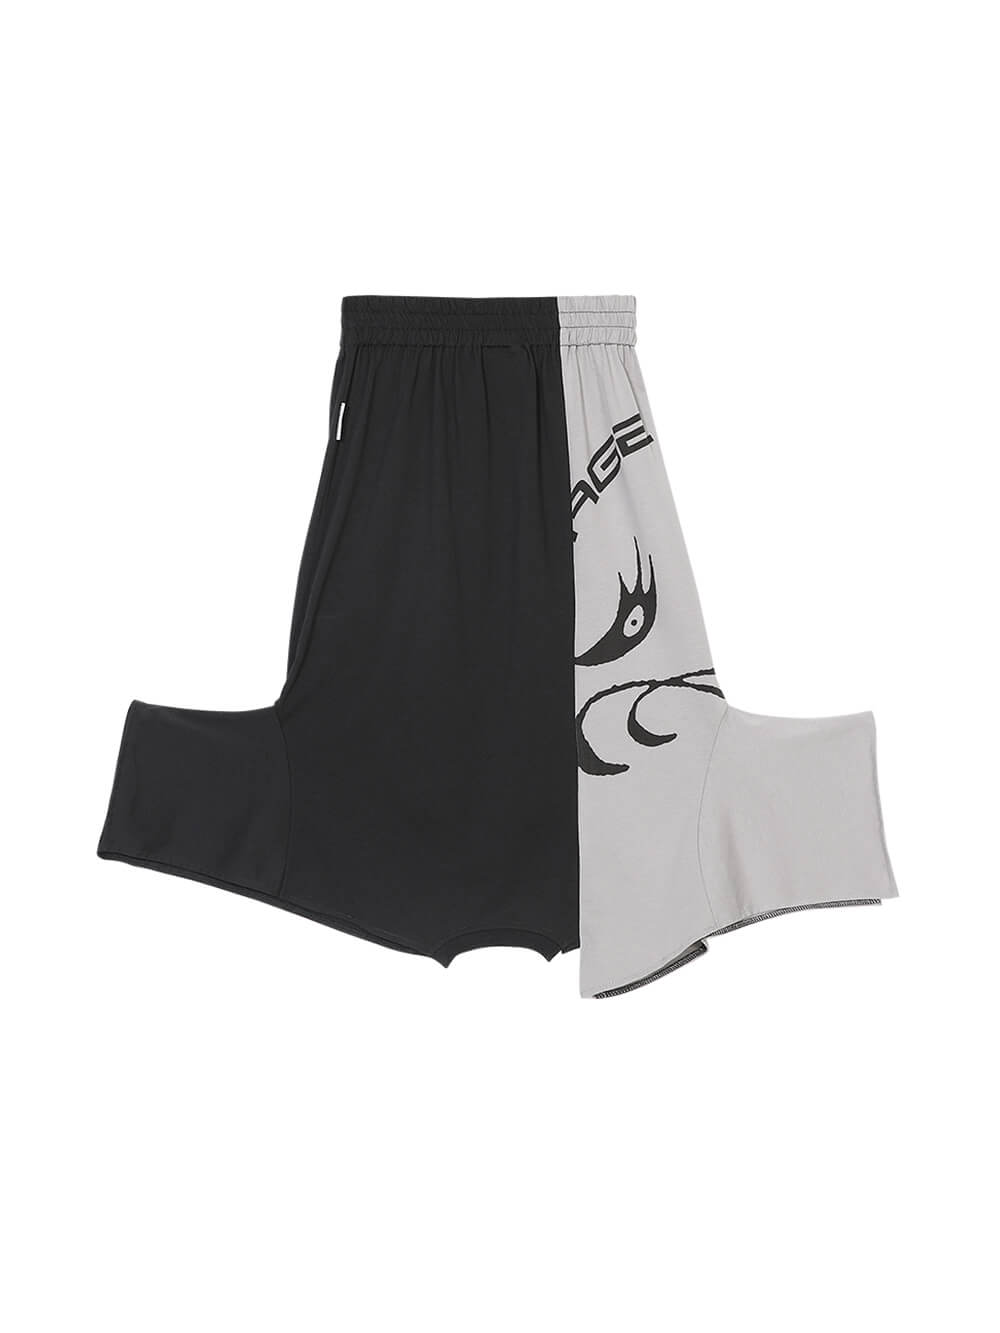 MUKTANK Black And White Stitching Suit Skirt